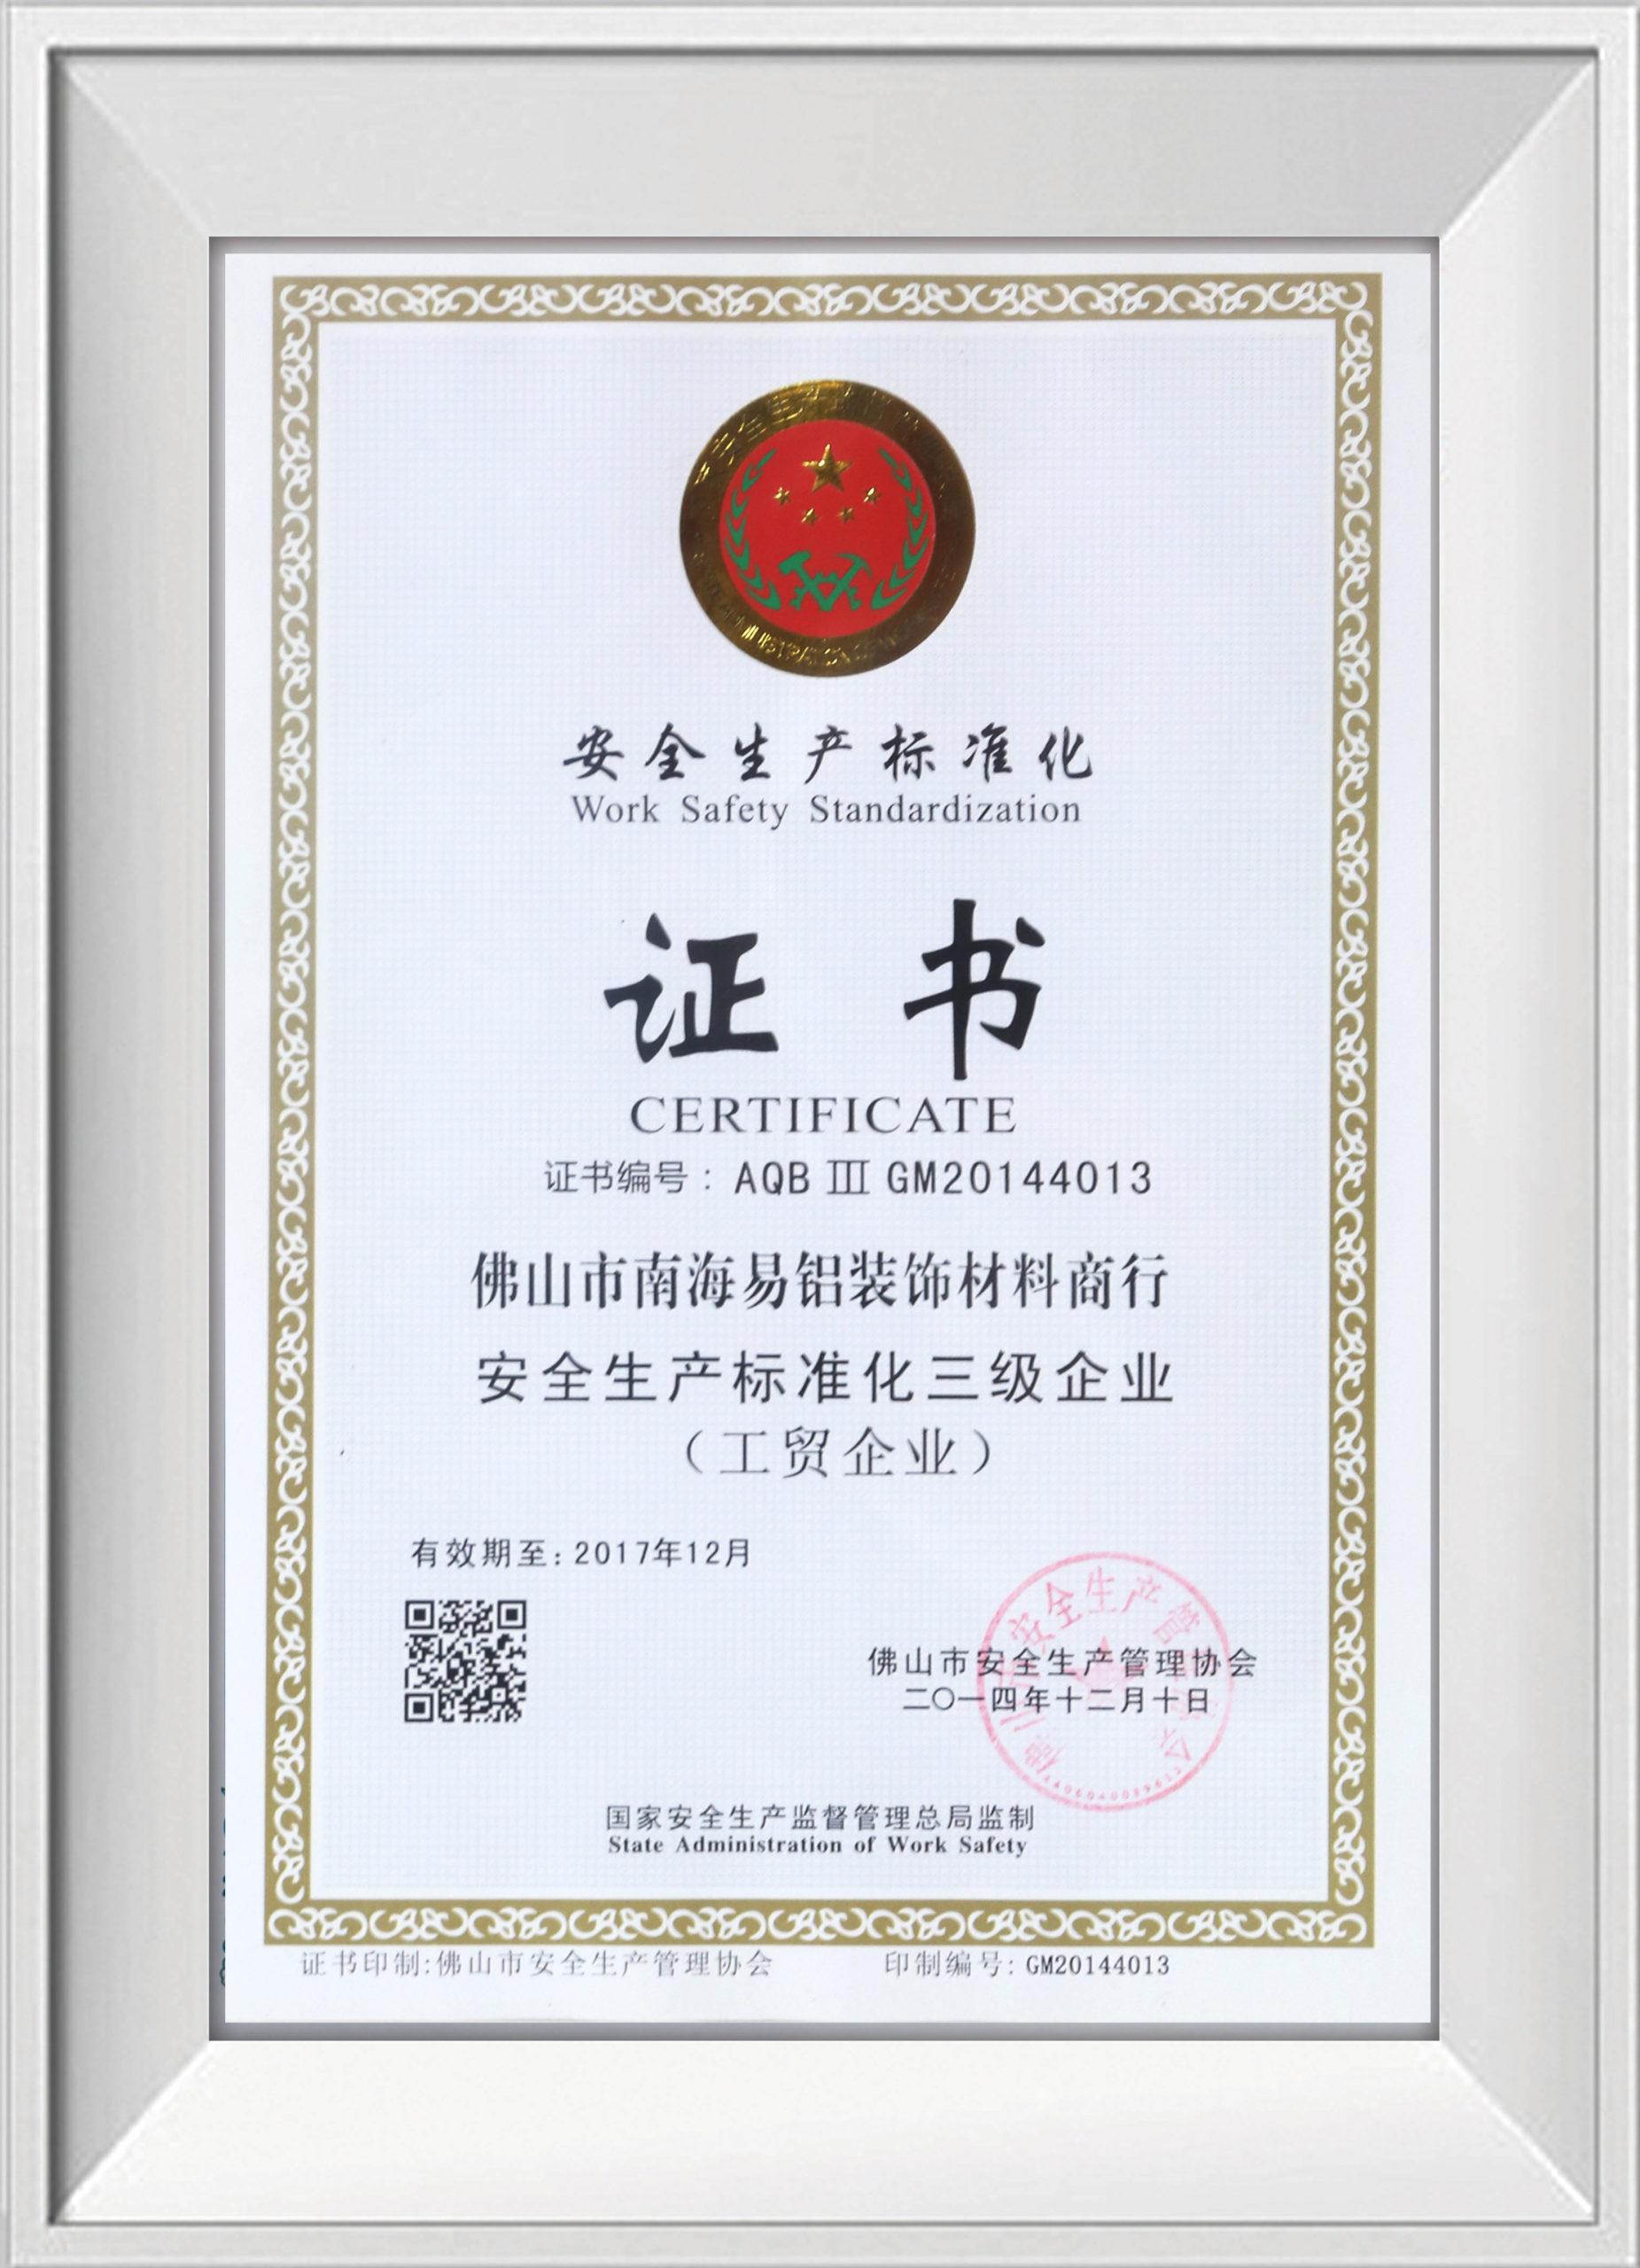 Qualification Certificate 9